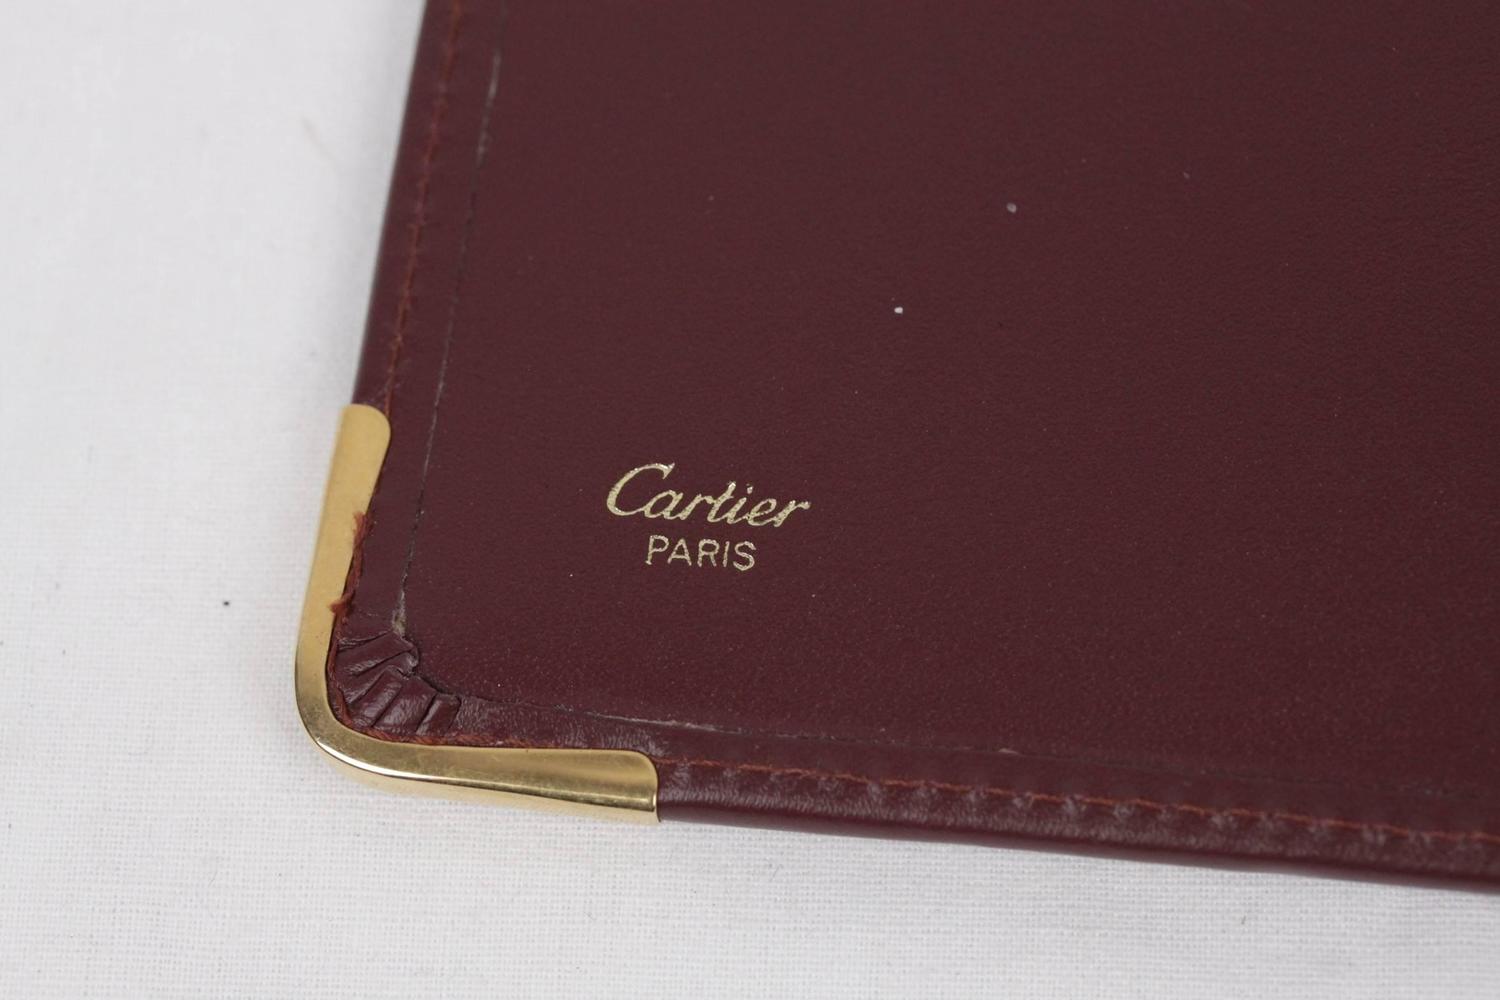 CARTIER PARIS Burgundy Leather ADDRESS BOOK Notepad AGENDA Cover For ...